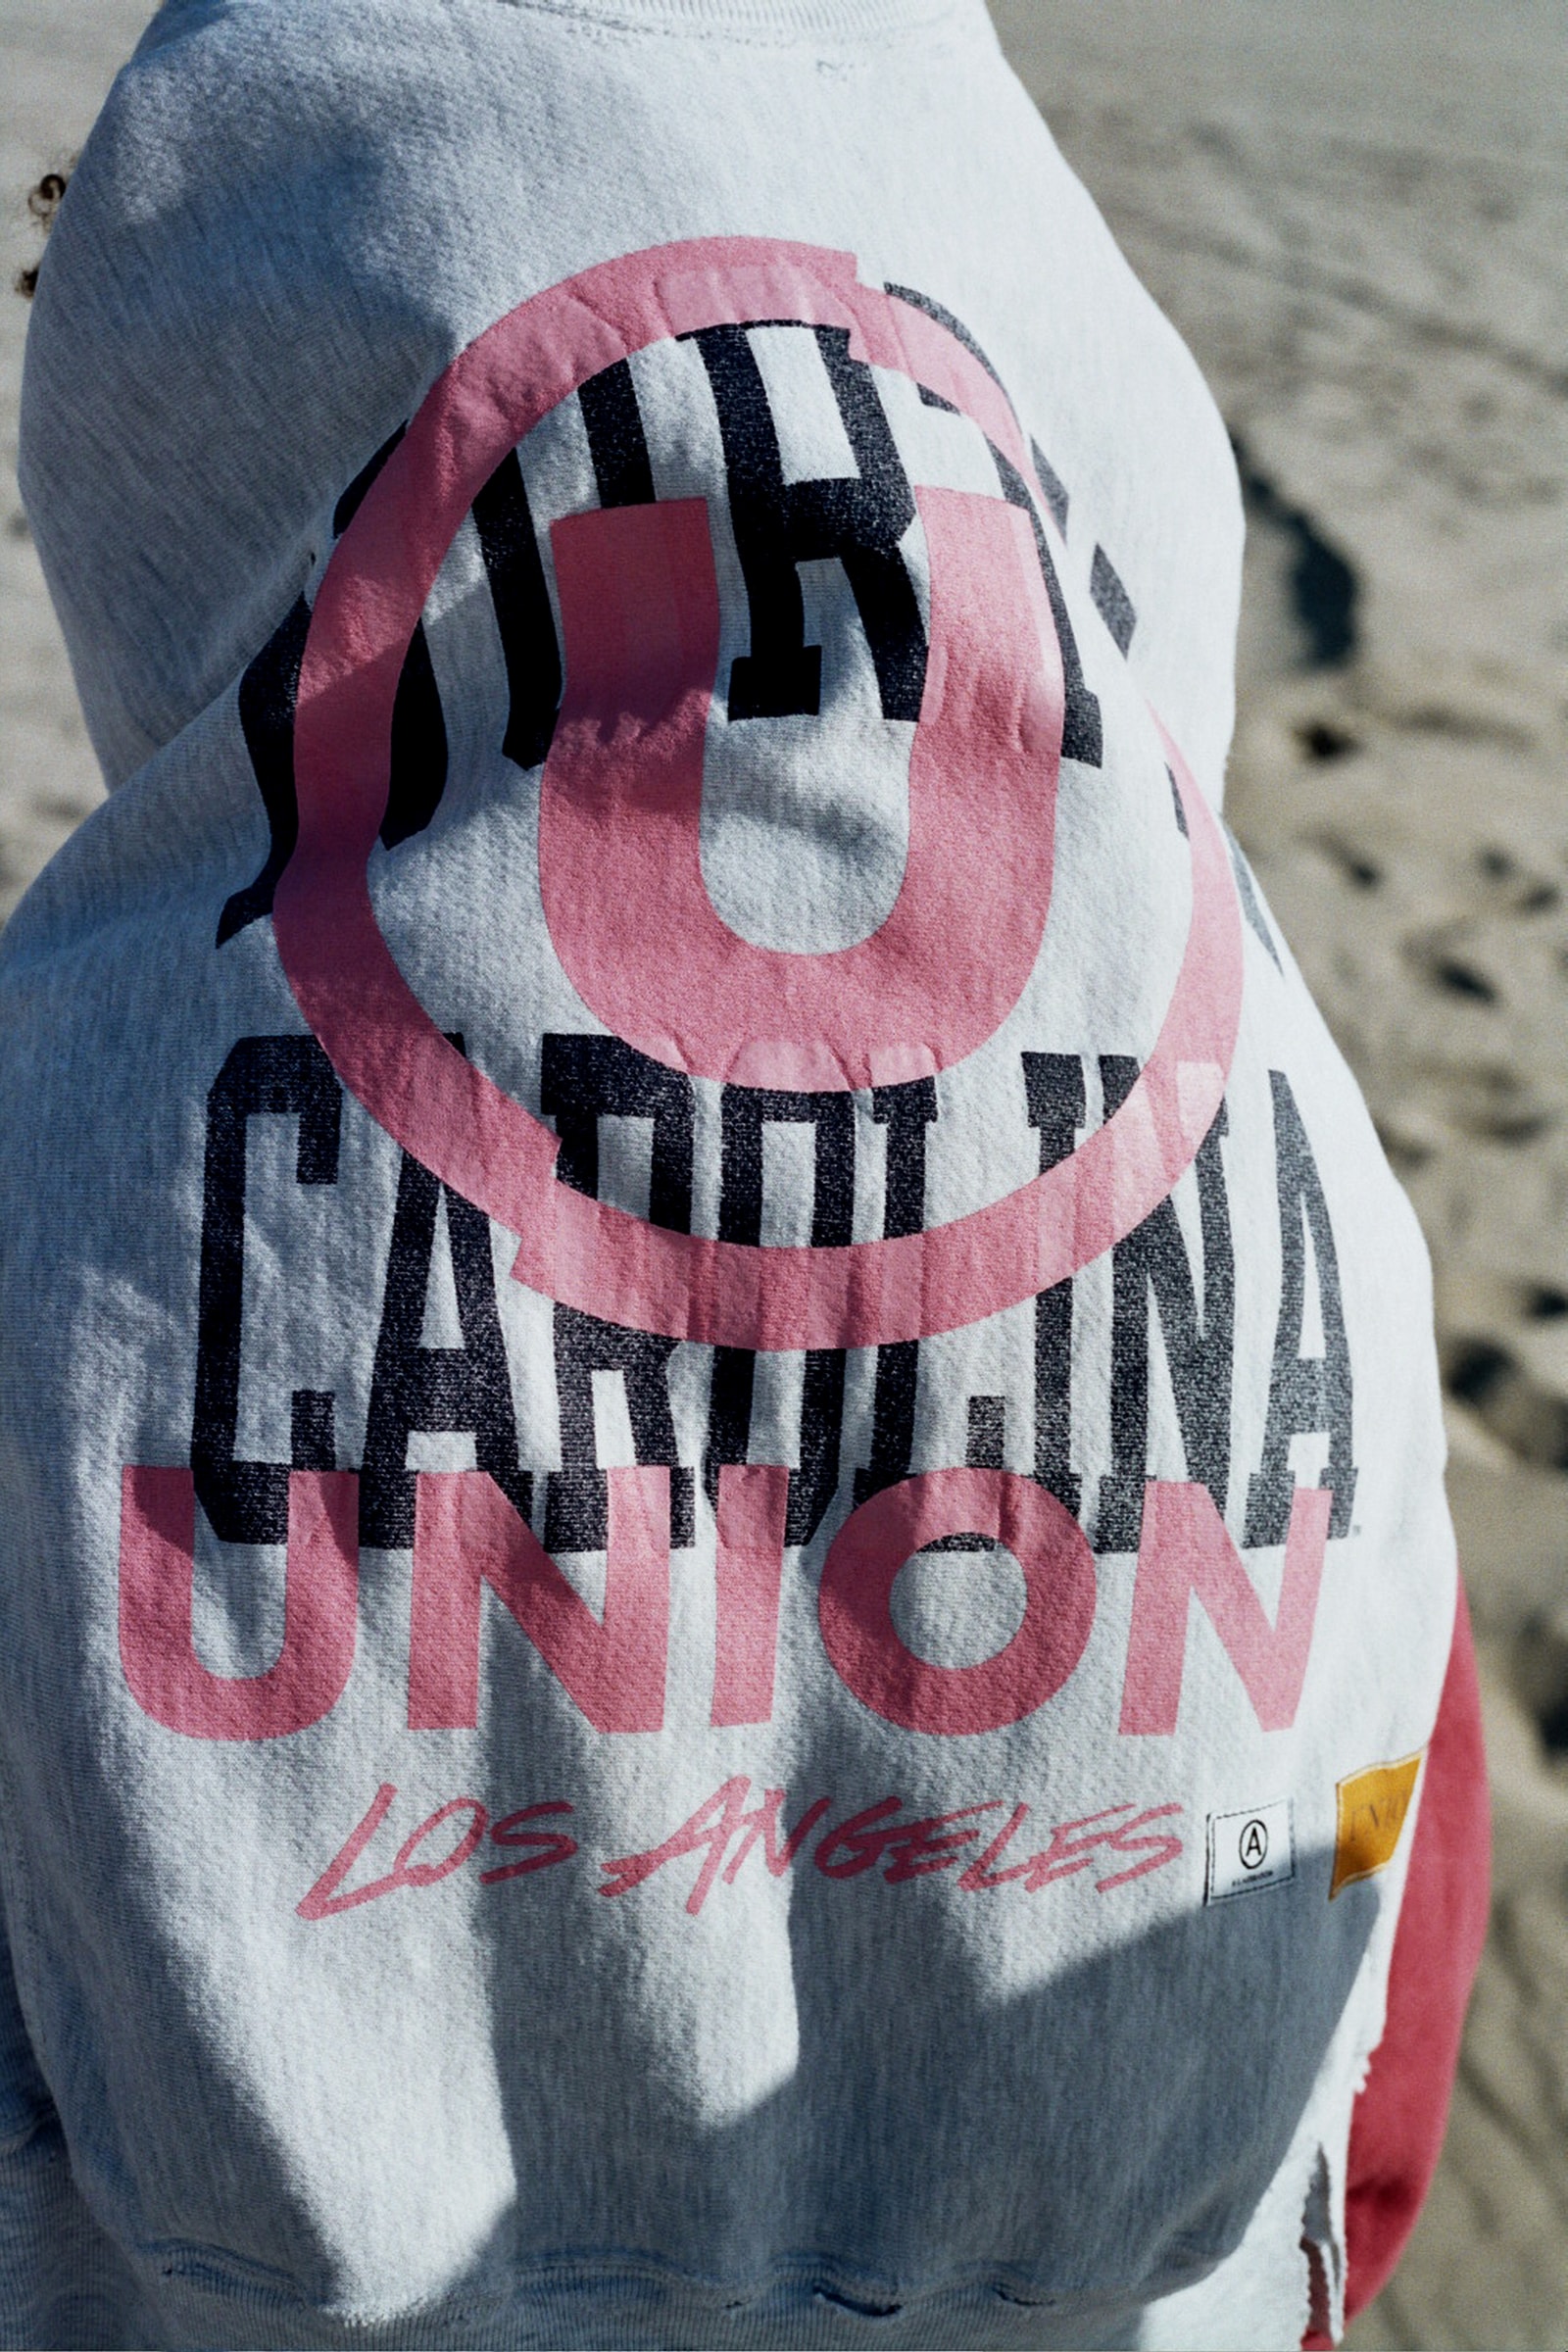 Union LA Lookbook Champion Collegiate Grey/Pink Shirt